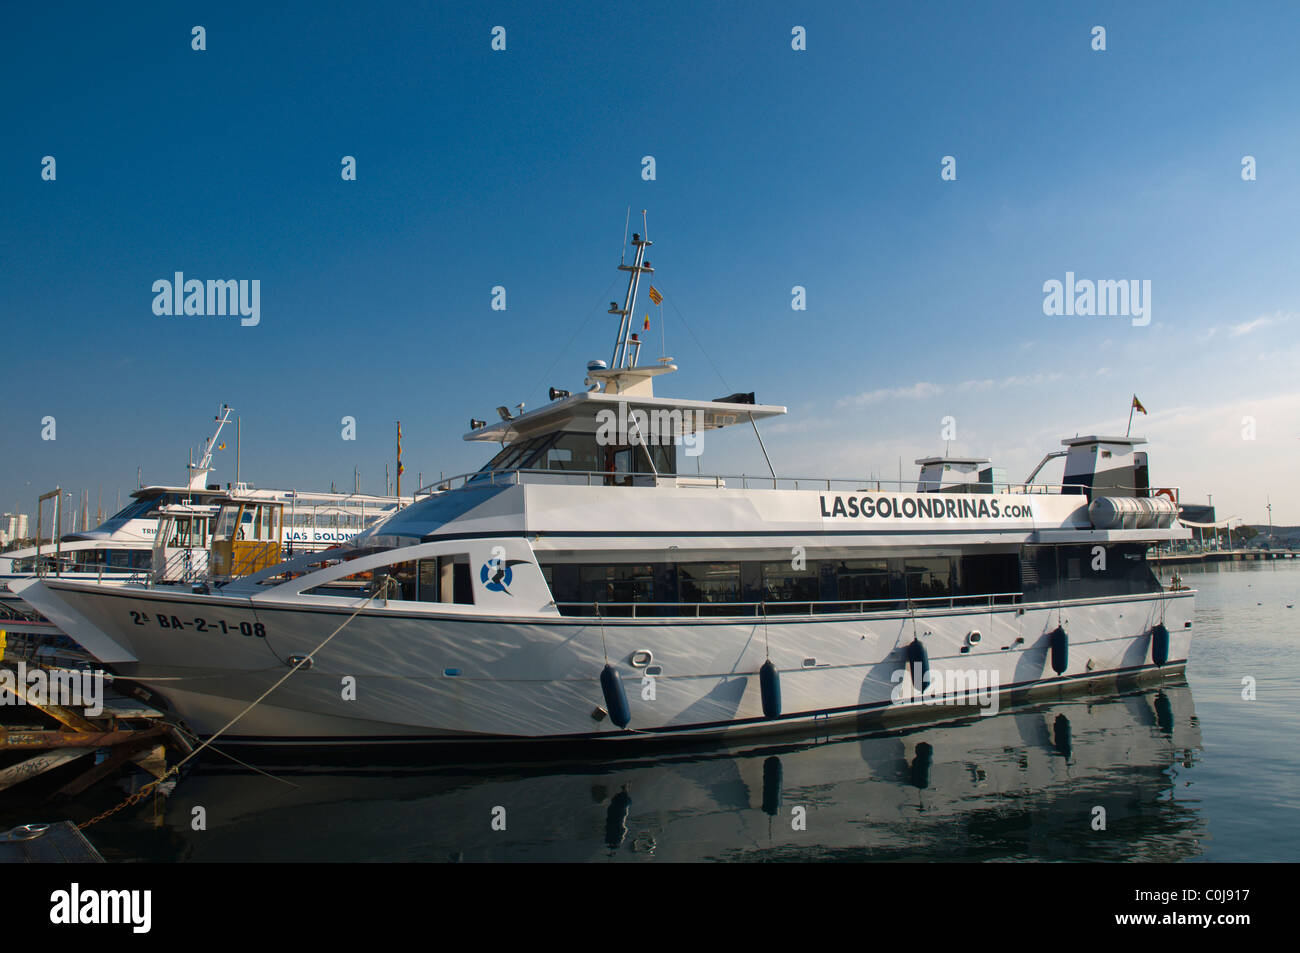 Las Golondrinas sightseeing boat at Port Vell central Barcelona Catalunya Spain Europe Stock Photo